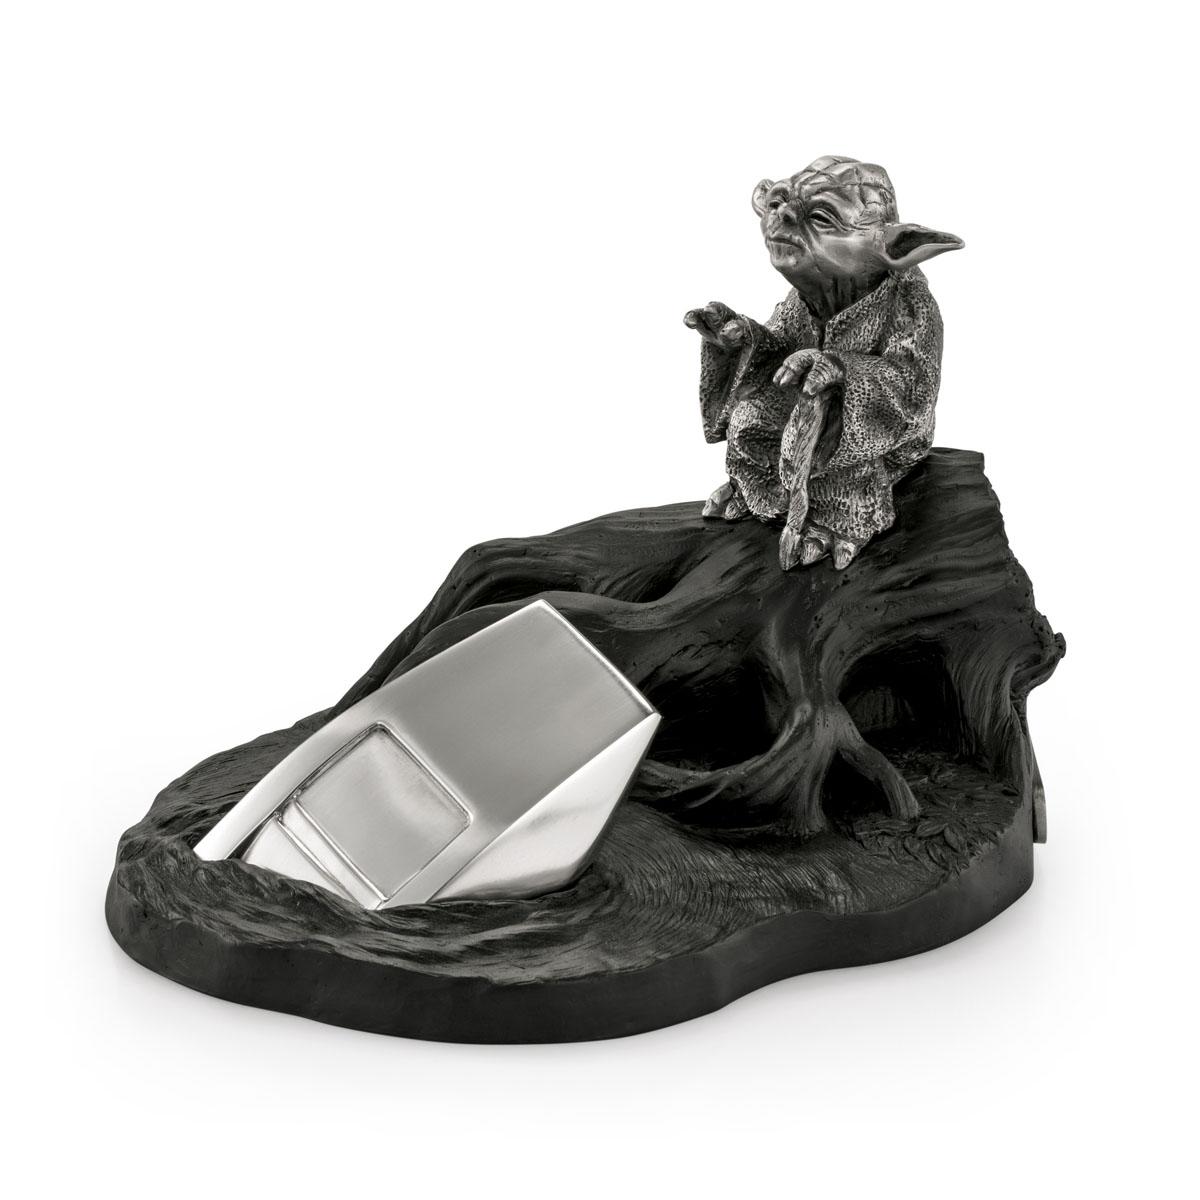 Limited Edition Yoda Jedi Master Figurine